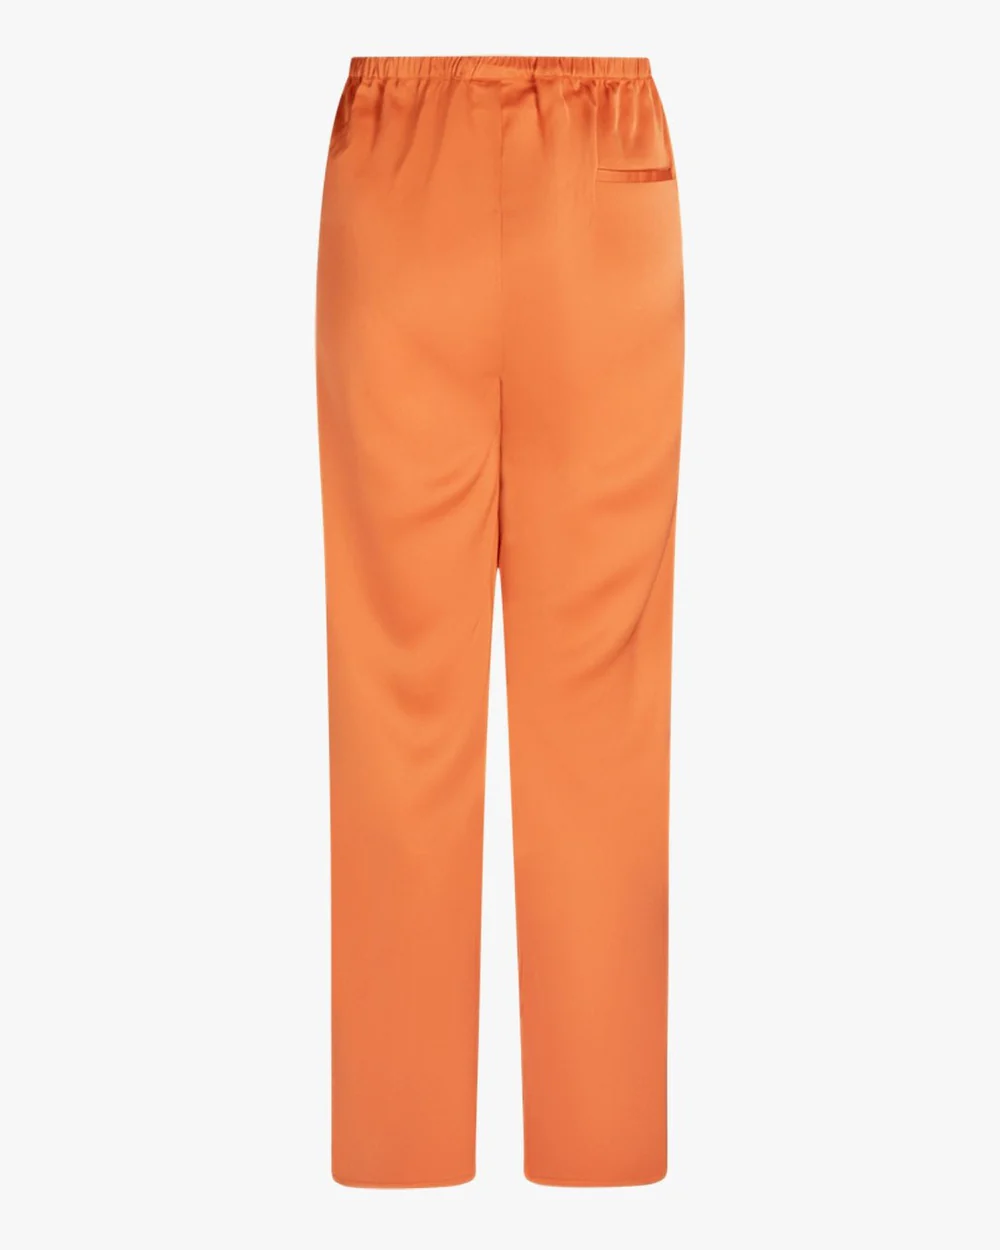 Luna Pants Spicy Orange